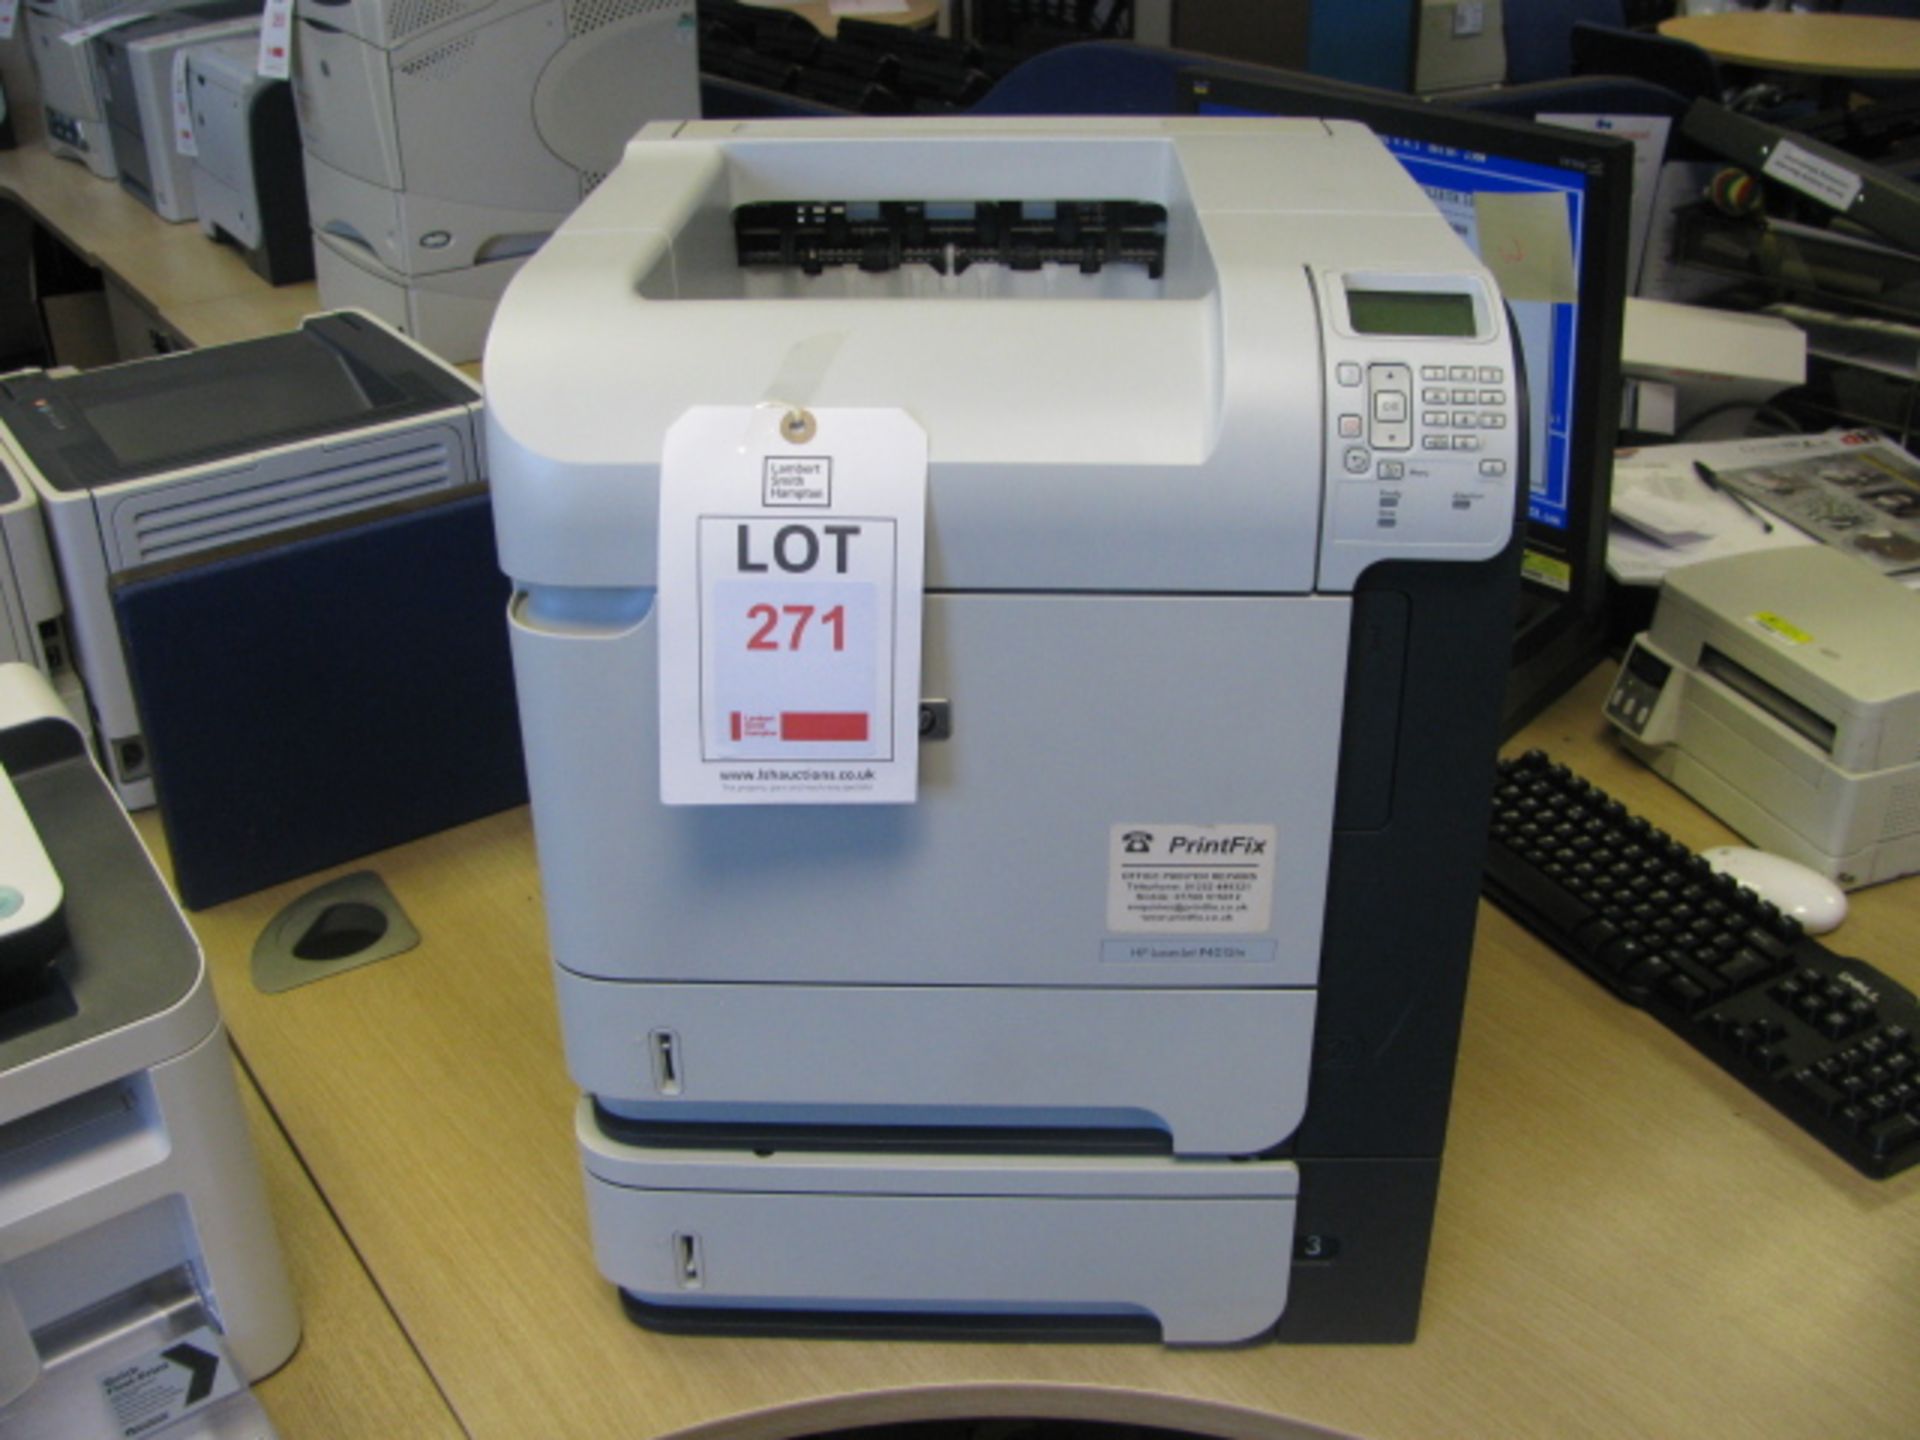 Hewlett Packard Laserjet P4015tn printer